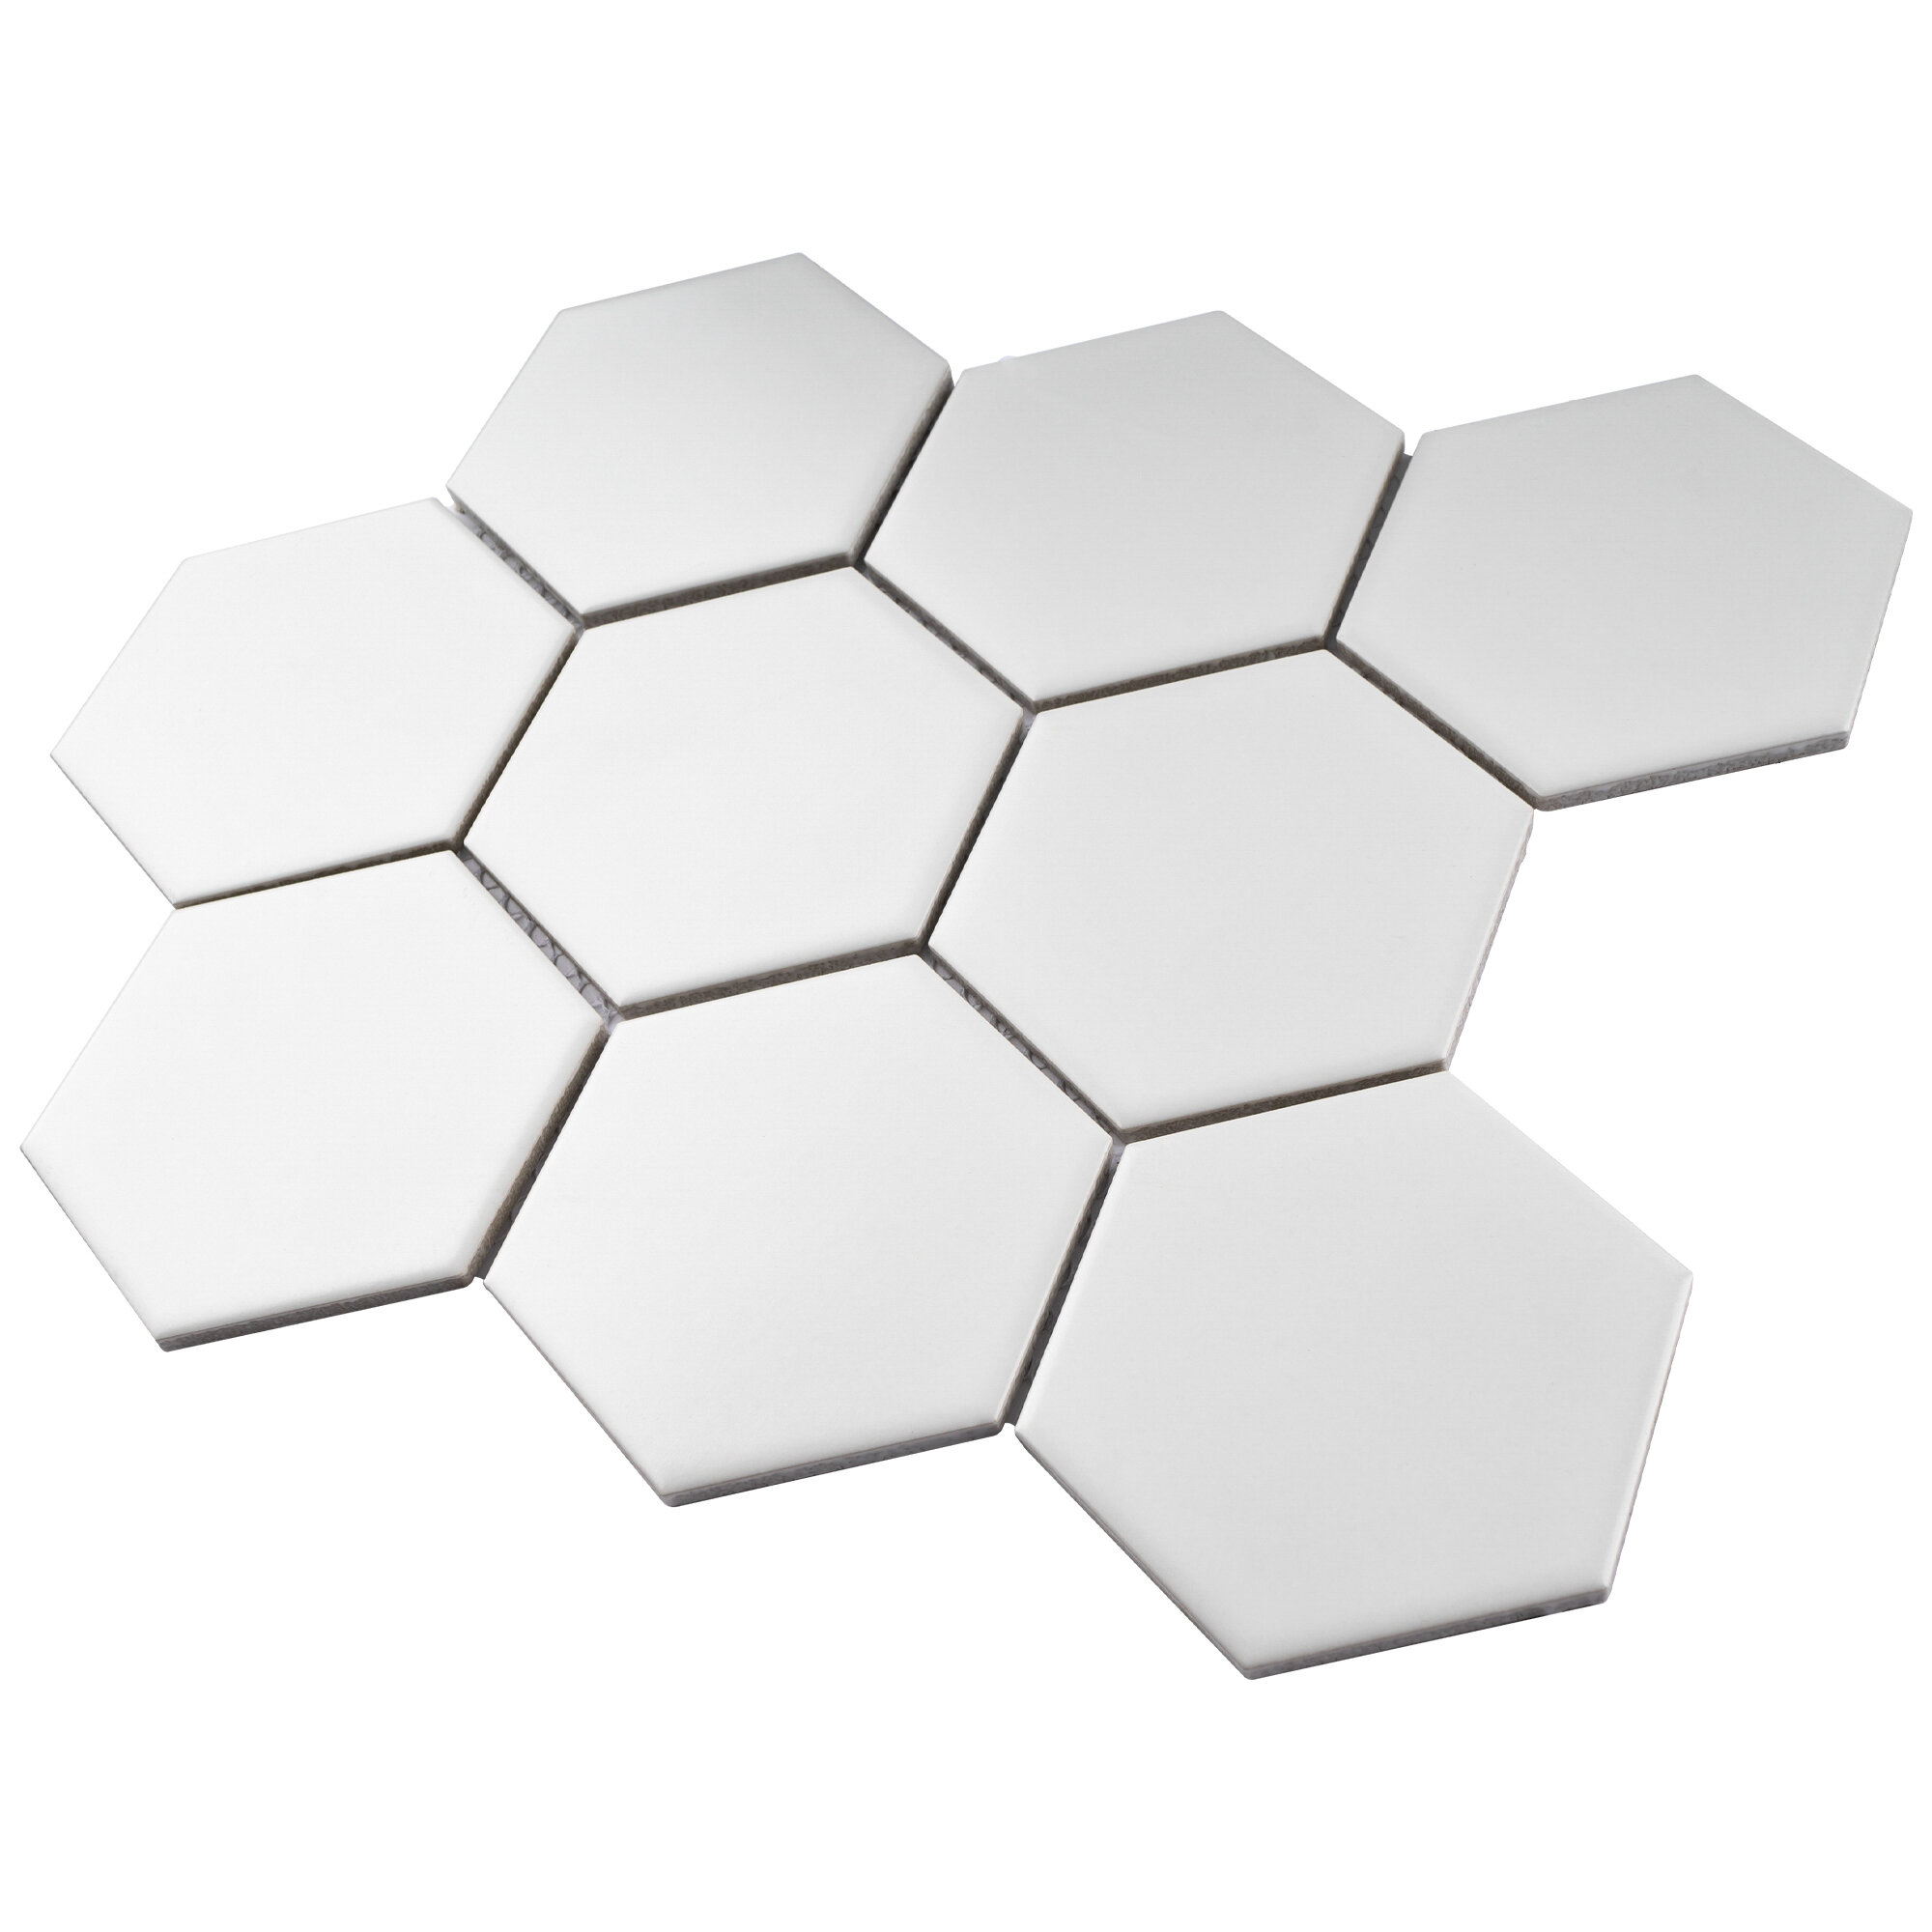 Lot of 6 Florida FT USA Porcelain Ceramic Floor Tiles Hexagon diamond 6" x 4" 